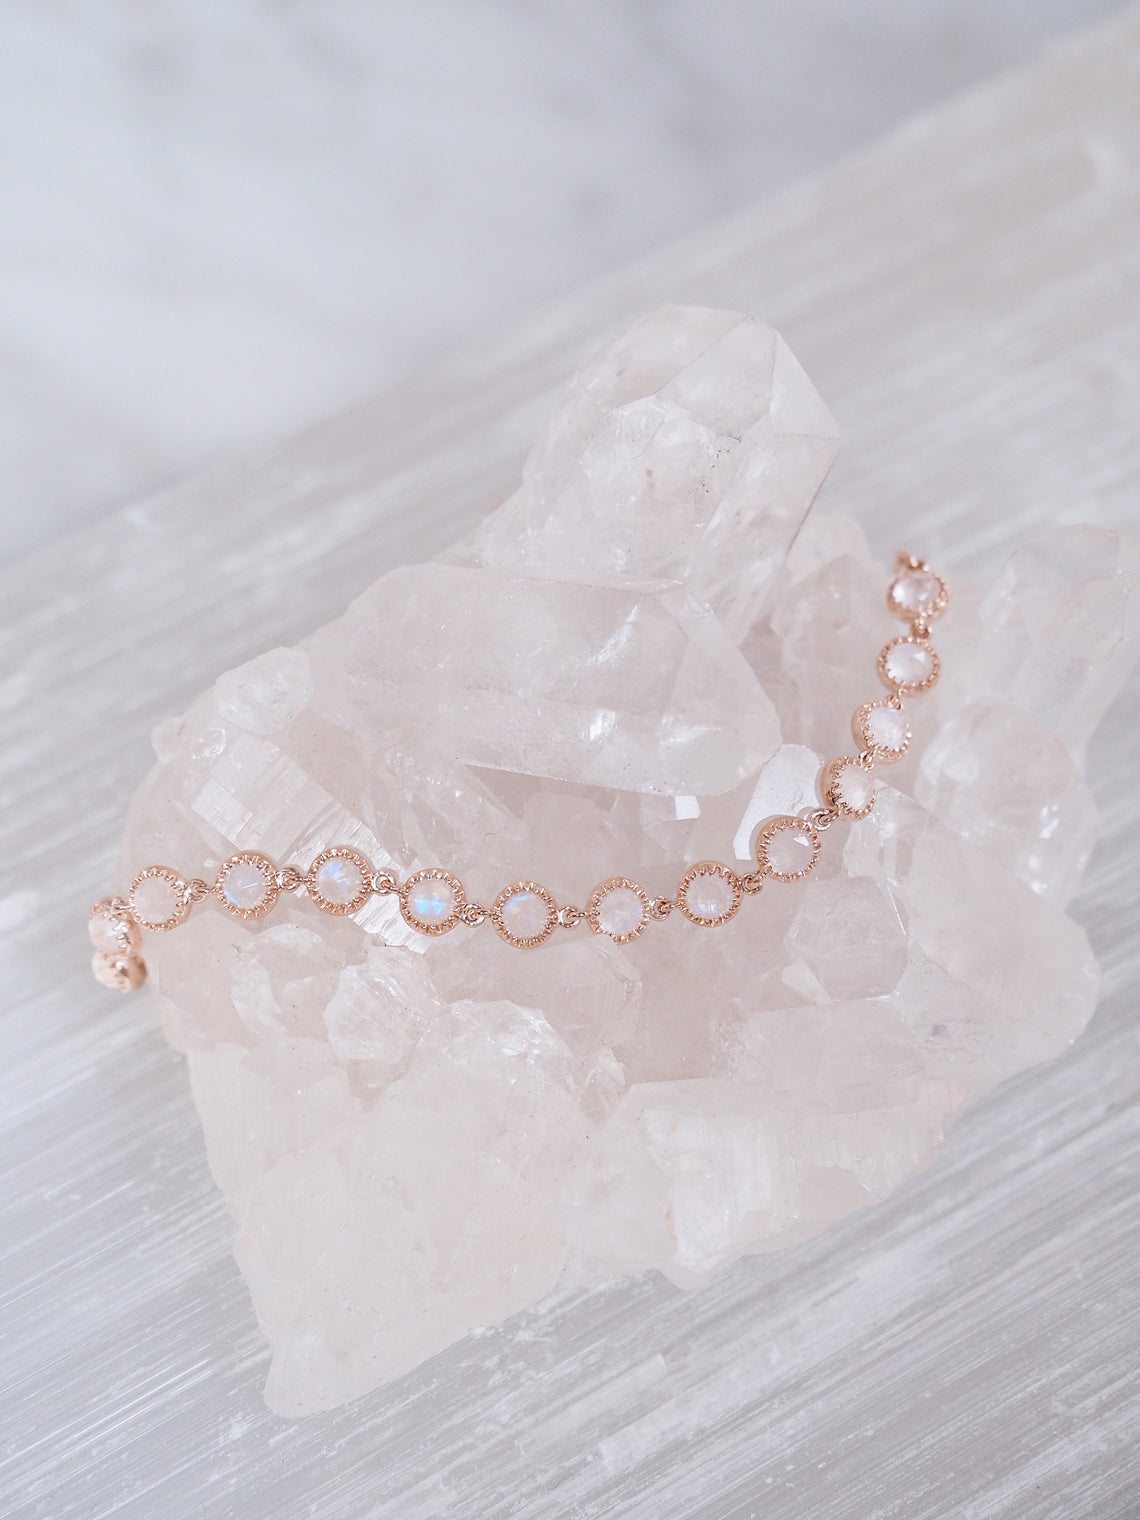 Zara Moonstone Bracelet | 14K Rose Gold